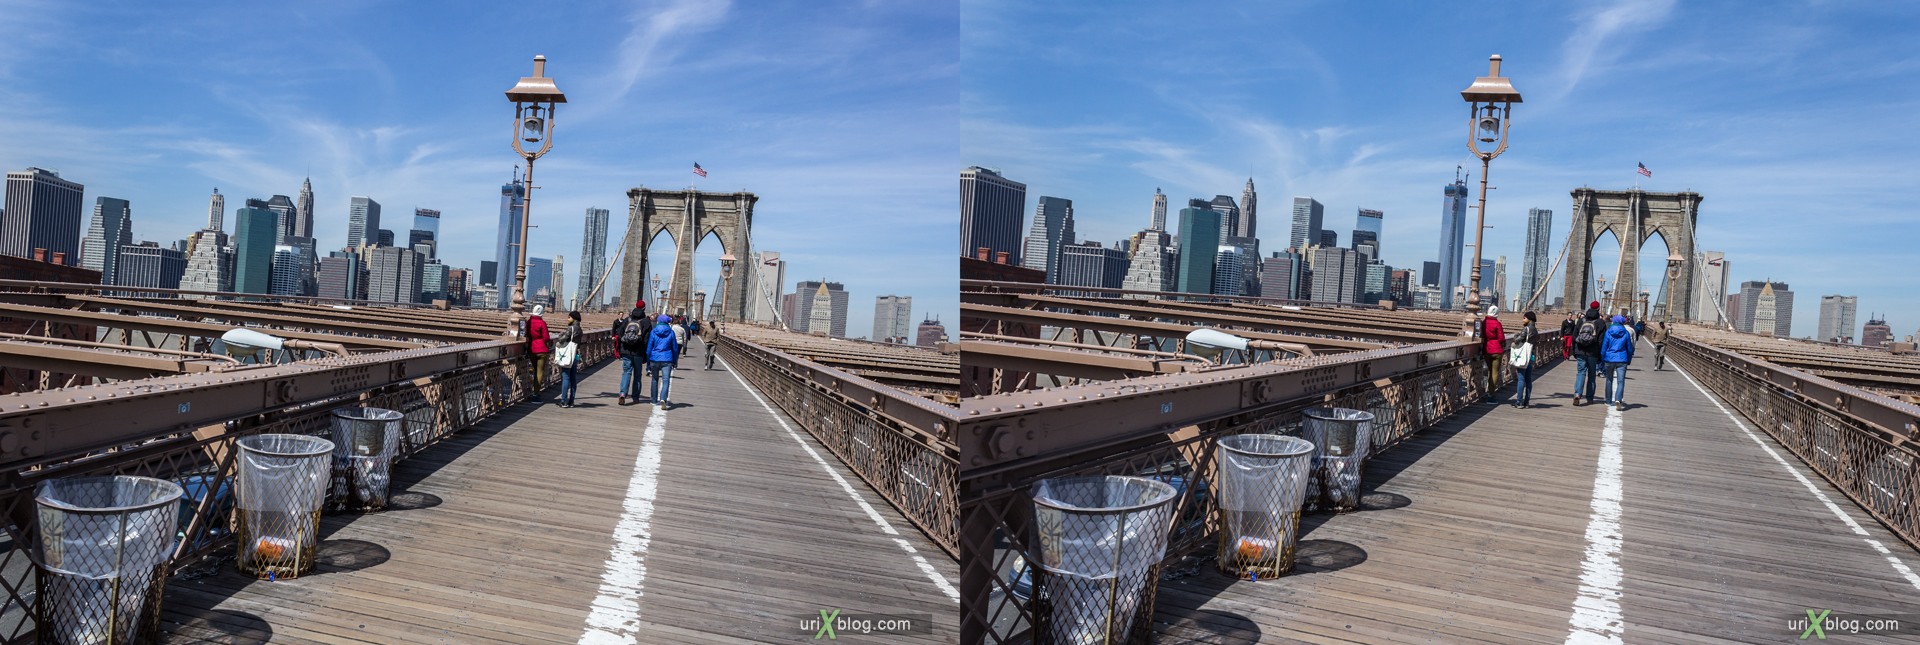 2013, Brooklyn Bridge, NYC, New York City, USA, 3D, stereo pair, cross-eyed, crossview, cross view stereo pair, stereoscopic